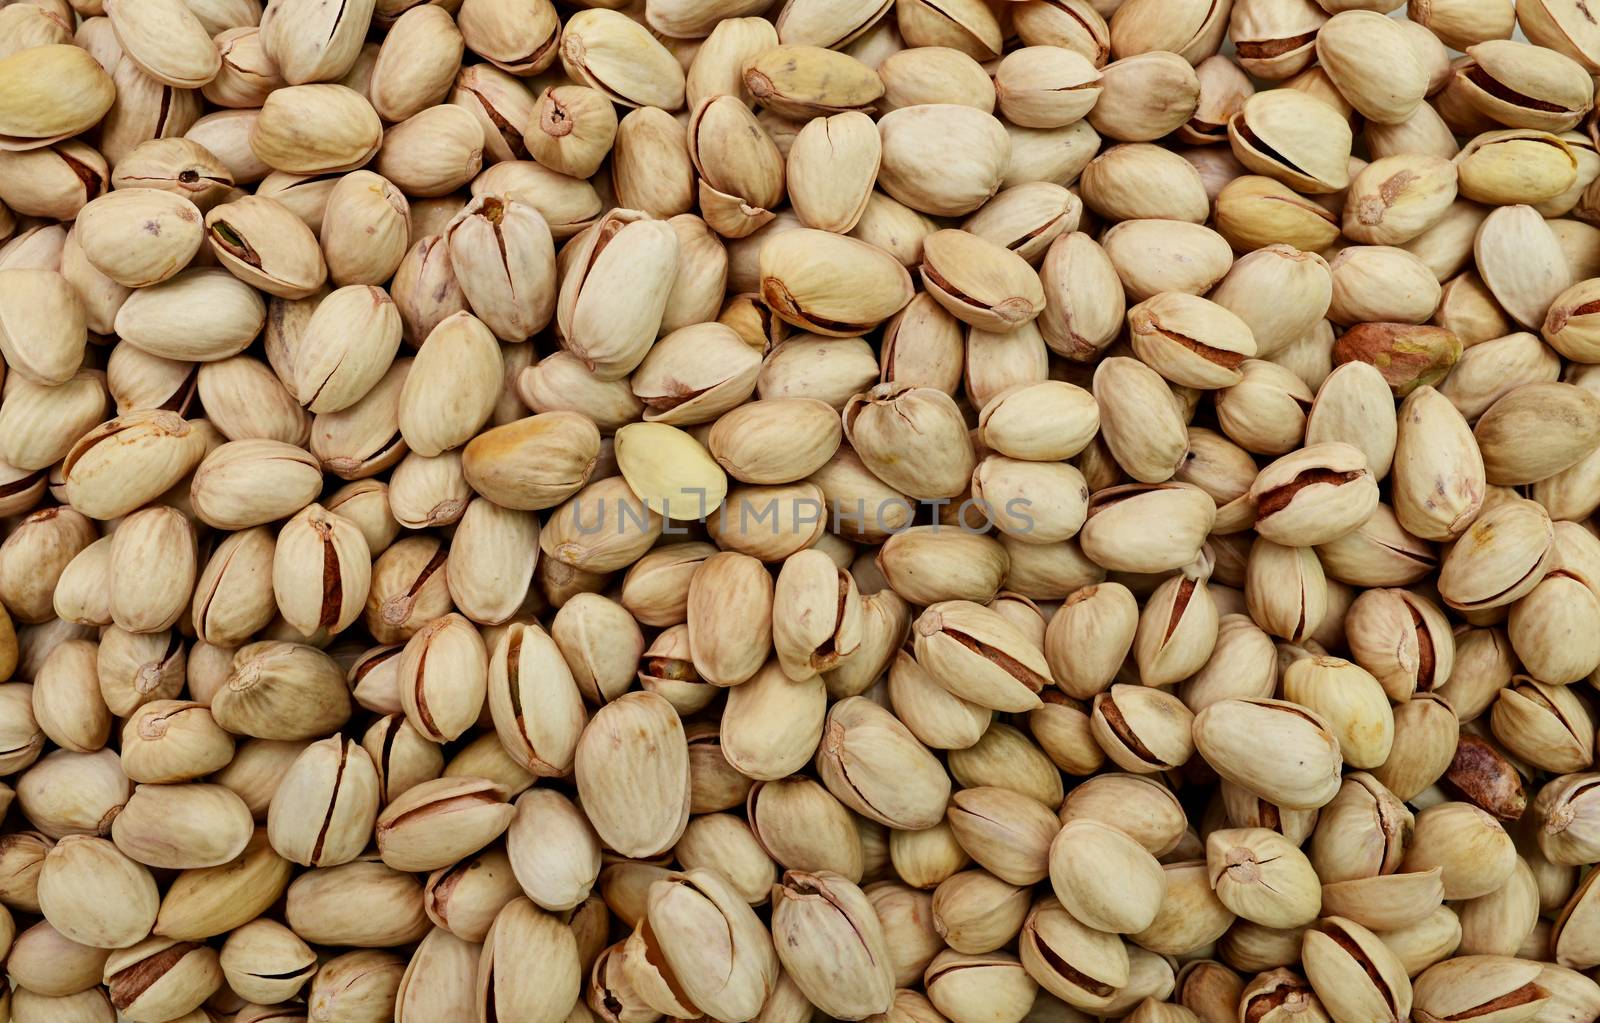 pistachio tree seeds texture food pattern background